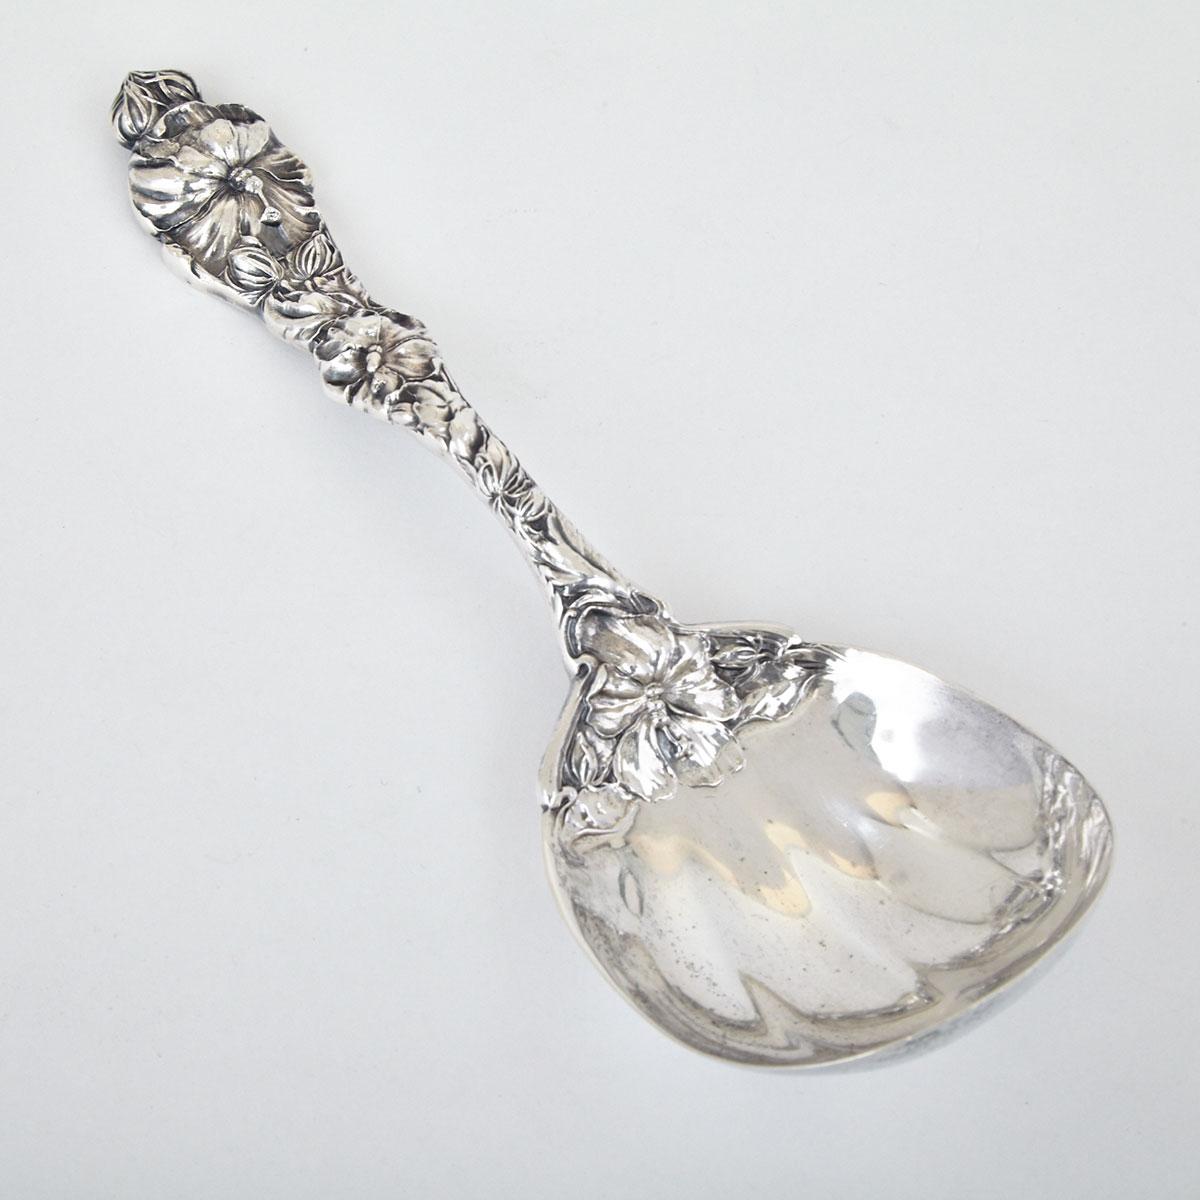 American Silver Berry Spoon, R. Blackinton & Co., North Attleboro, Mass., c.1900